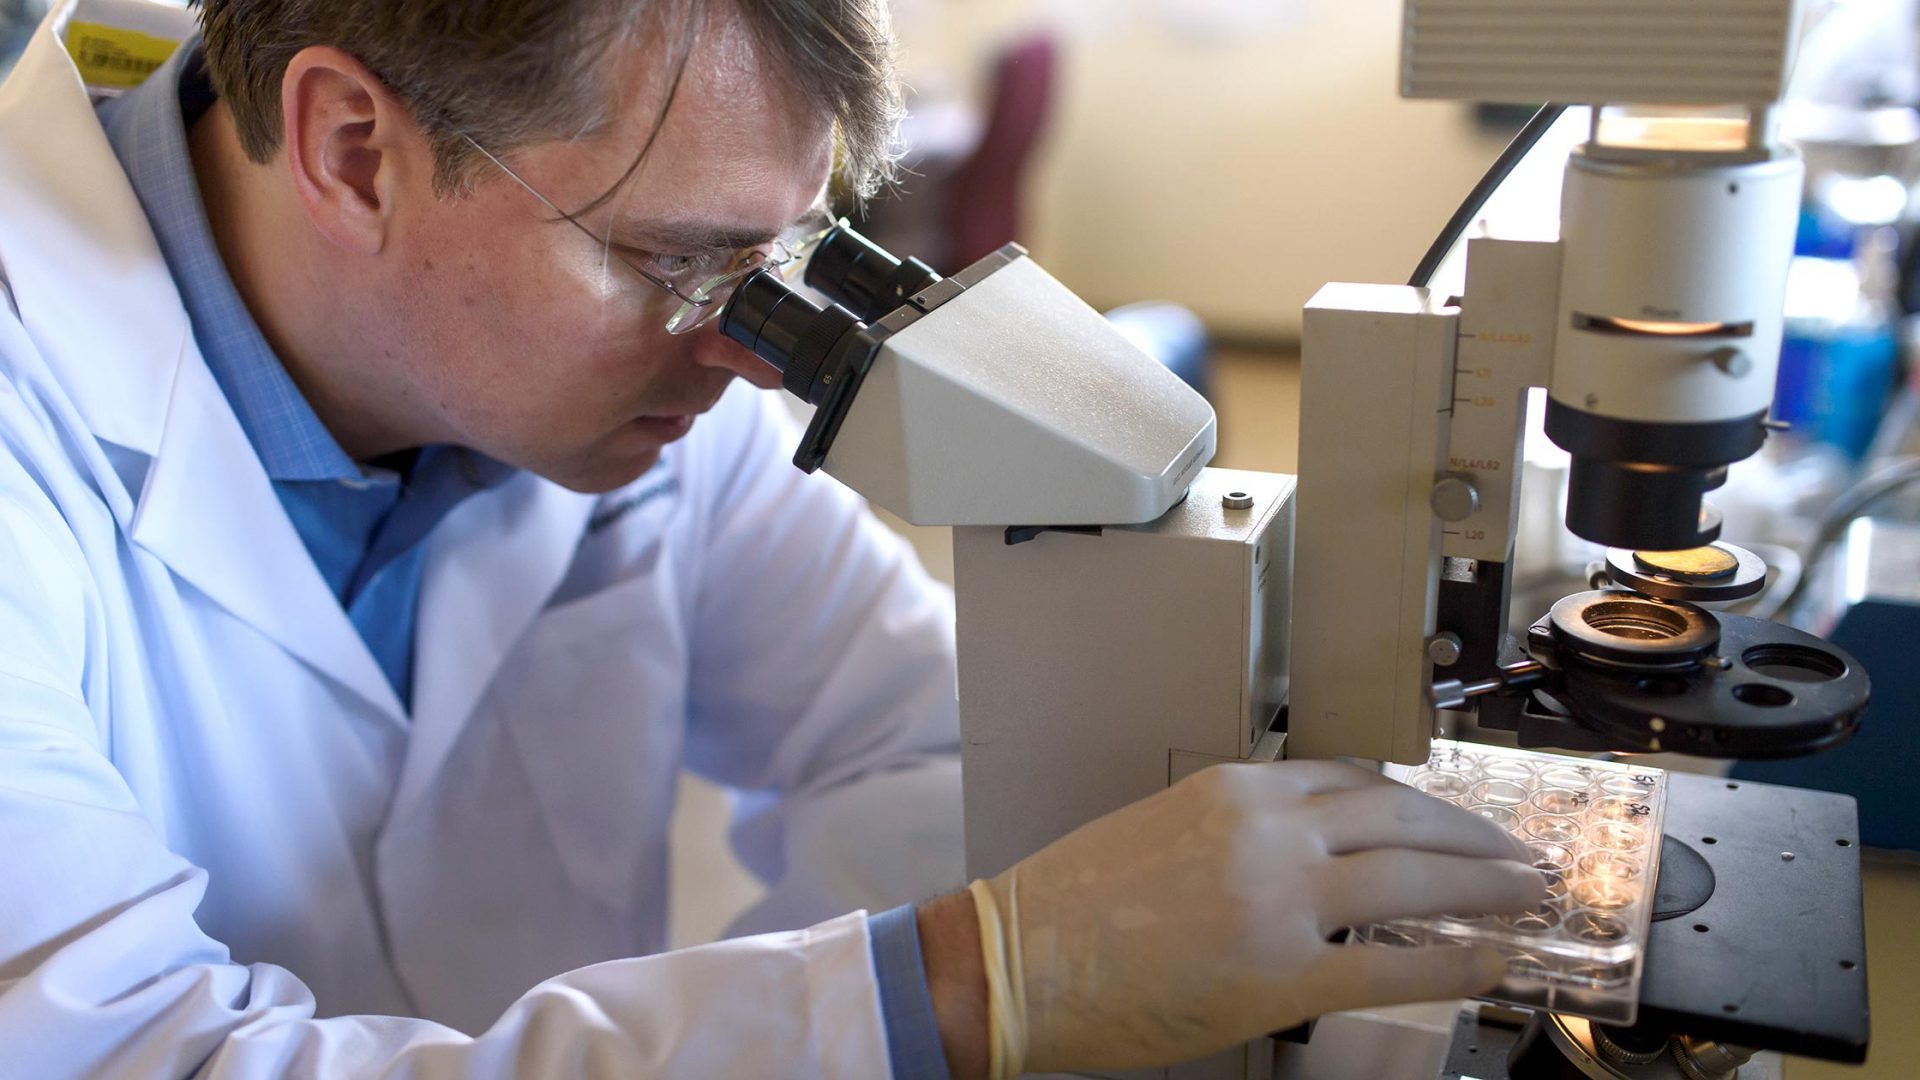 Dr. Johannes Nowatzky Examining Samples Through Microscope